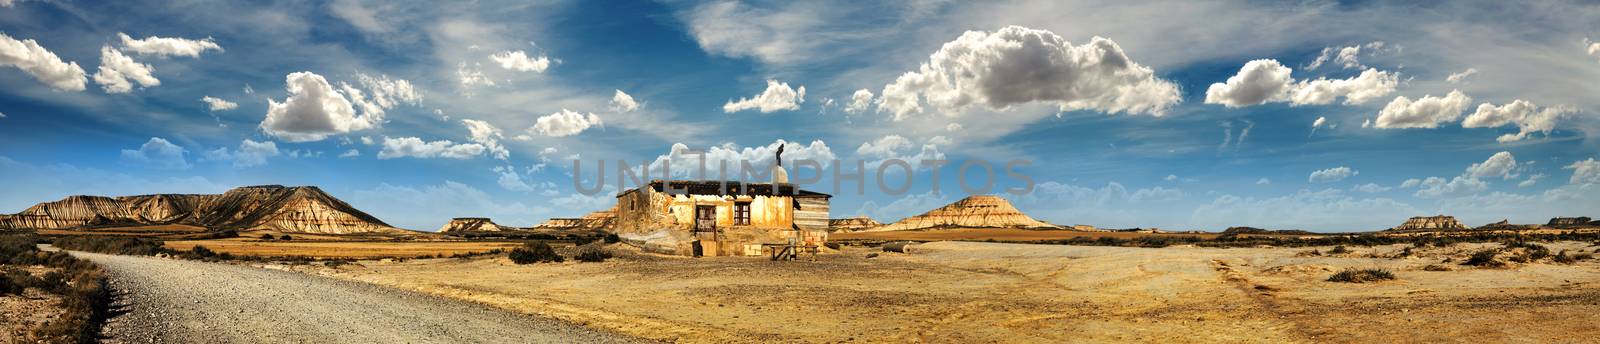 Little House on the Prairie panoramic image by deyan_georgiev